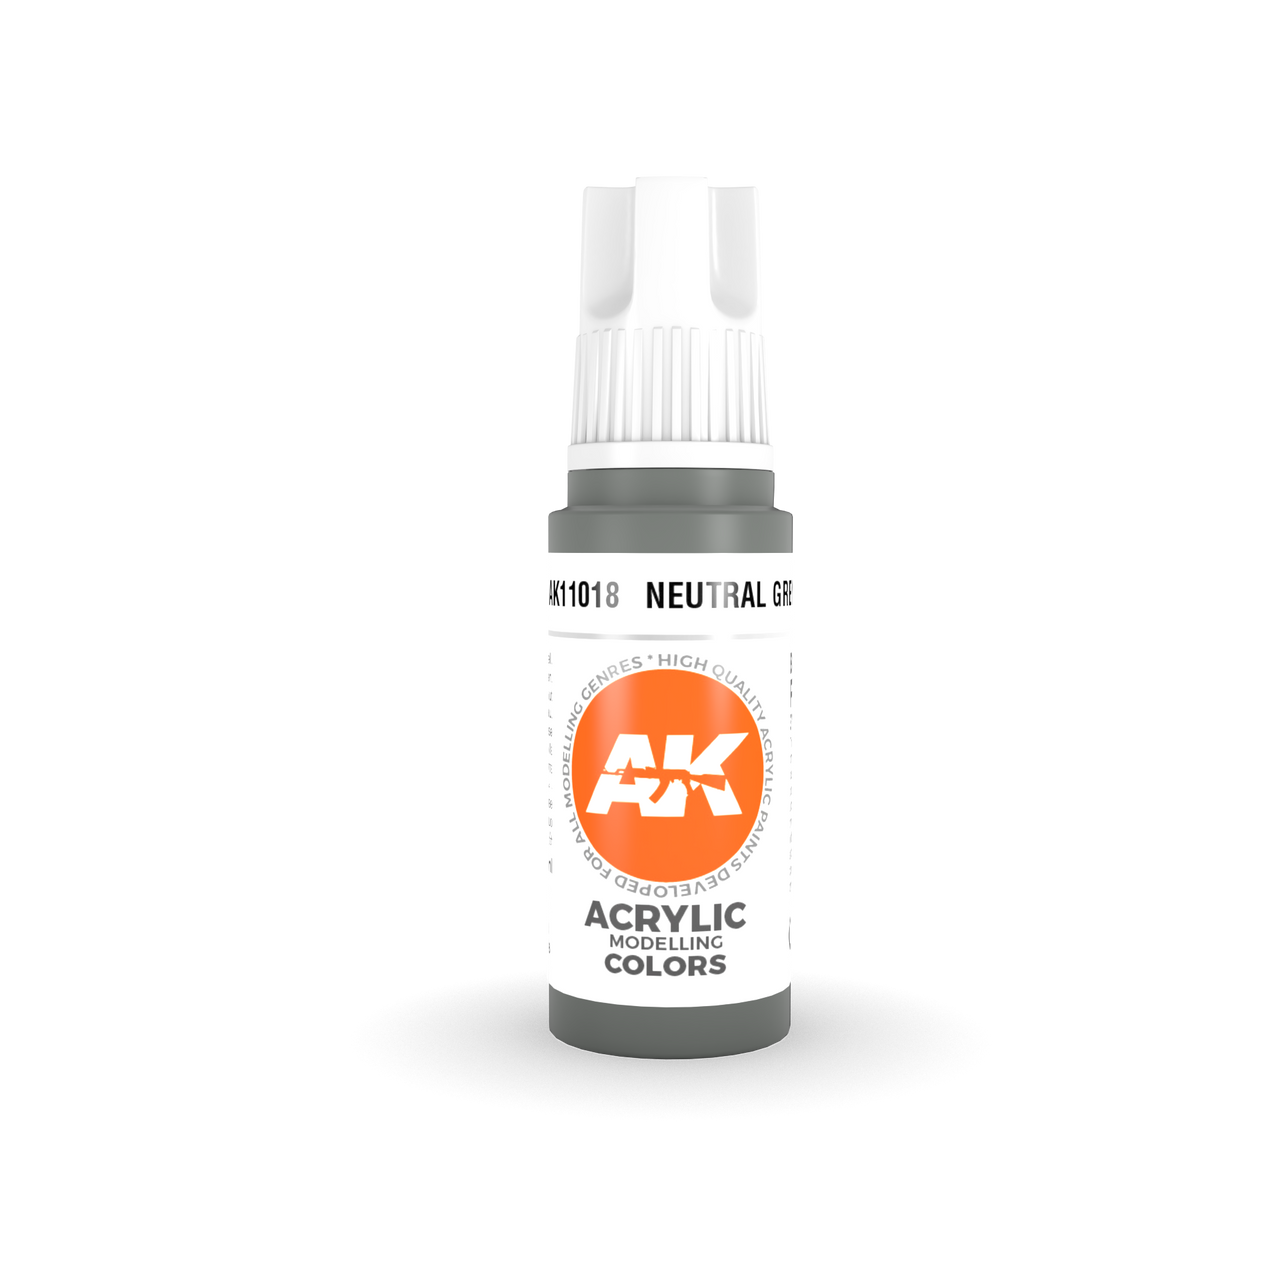 Neutral Grey - AK 3Gen Acrylic